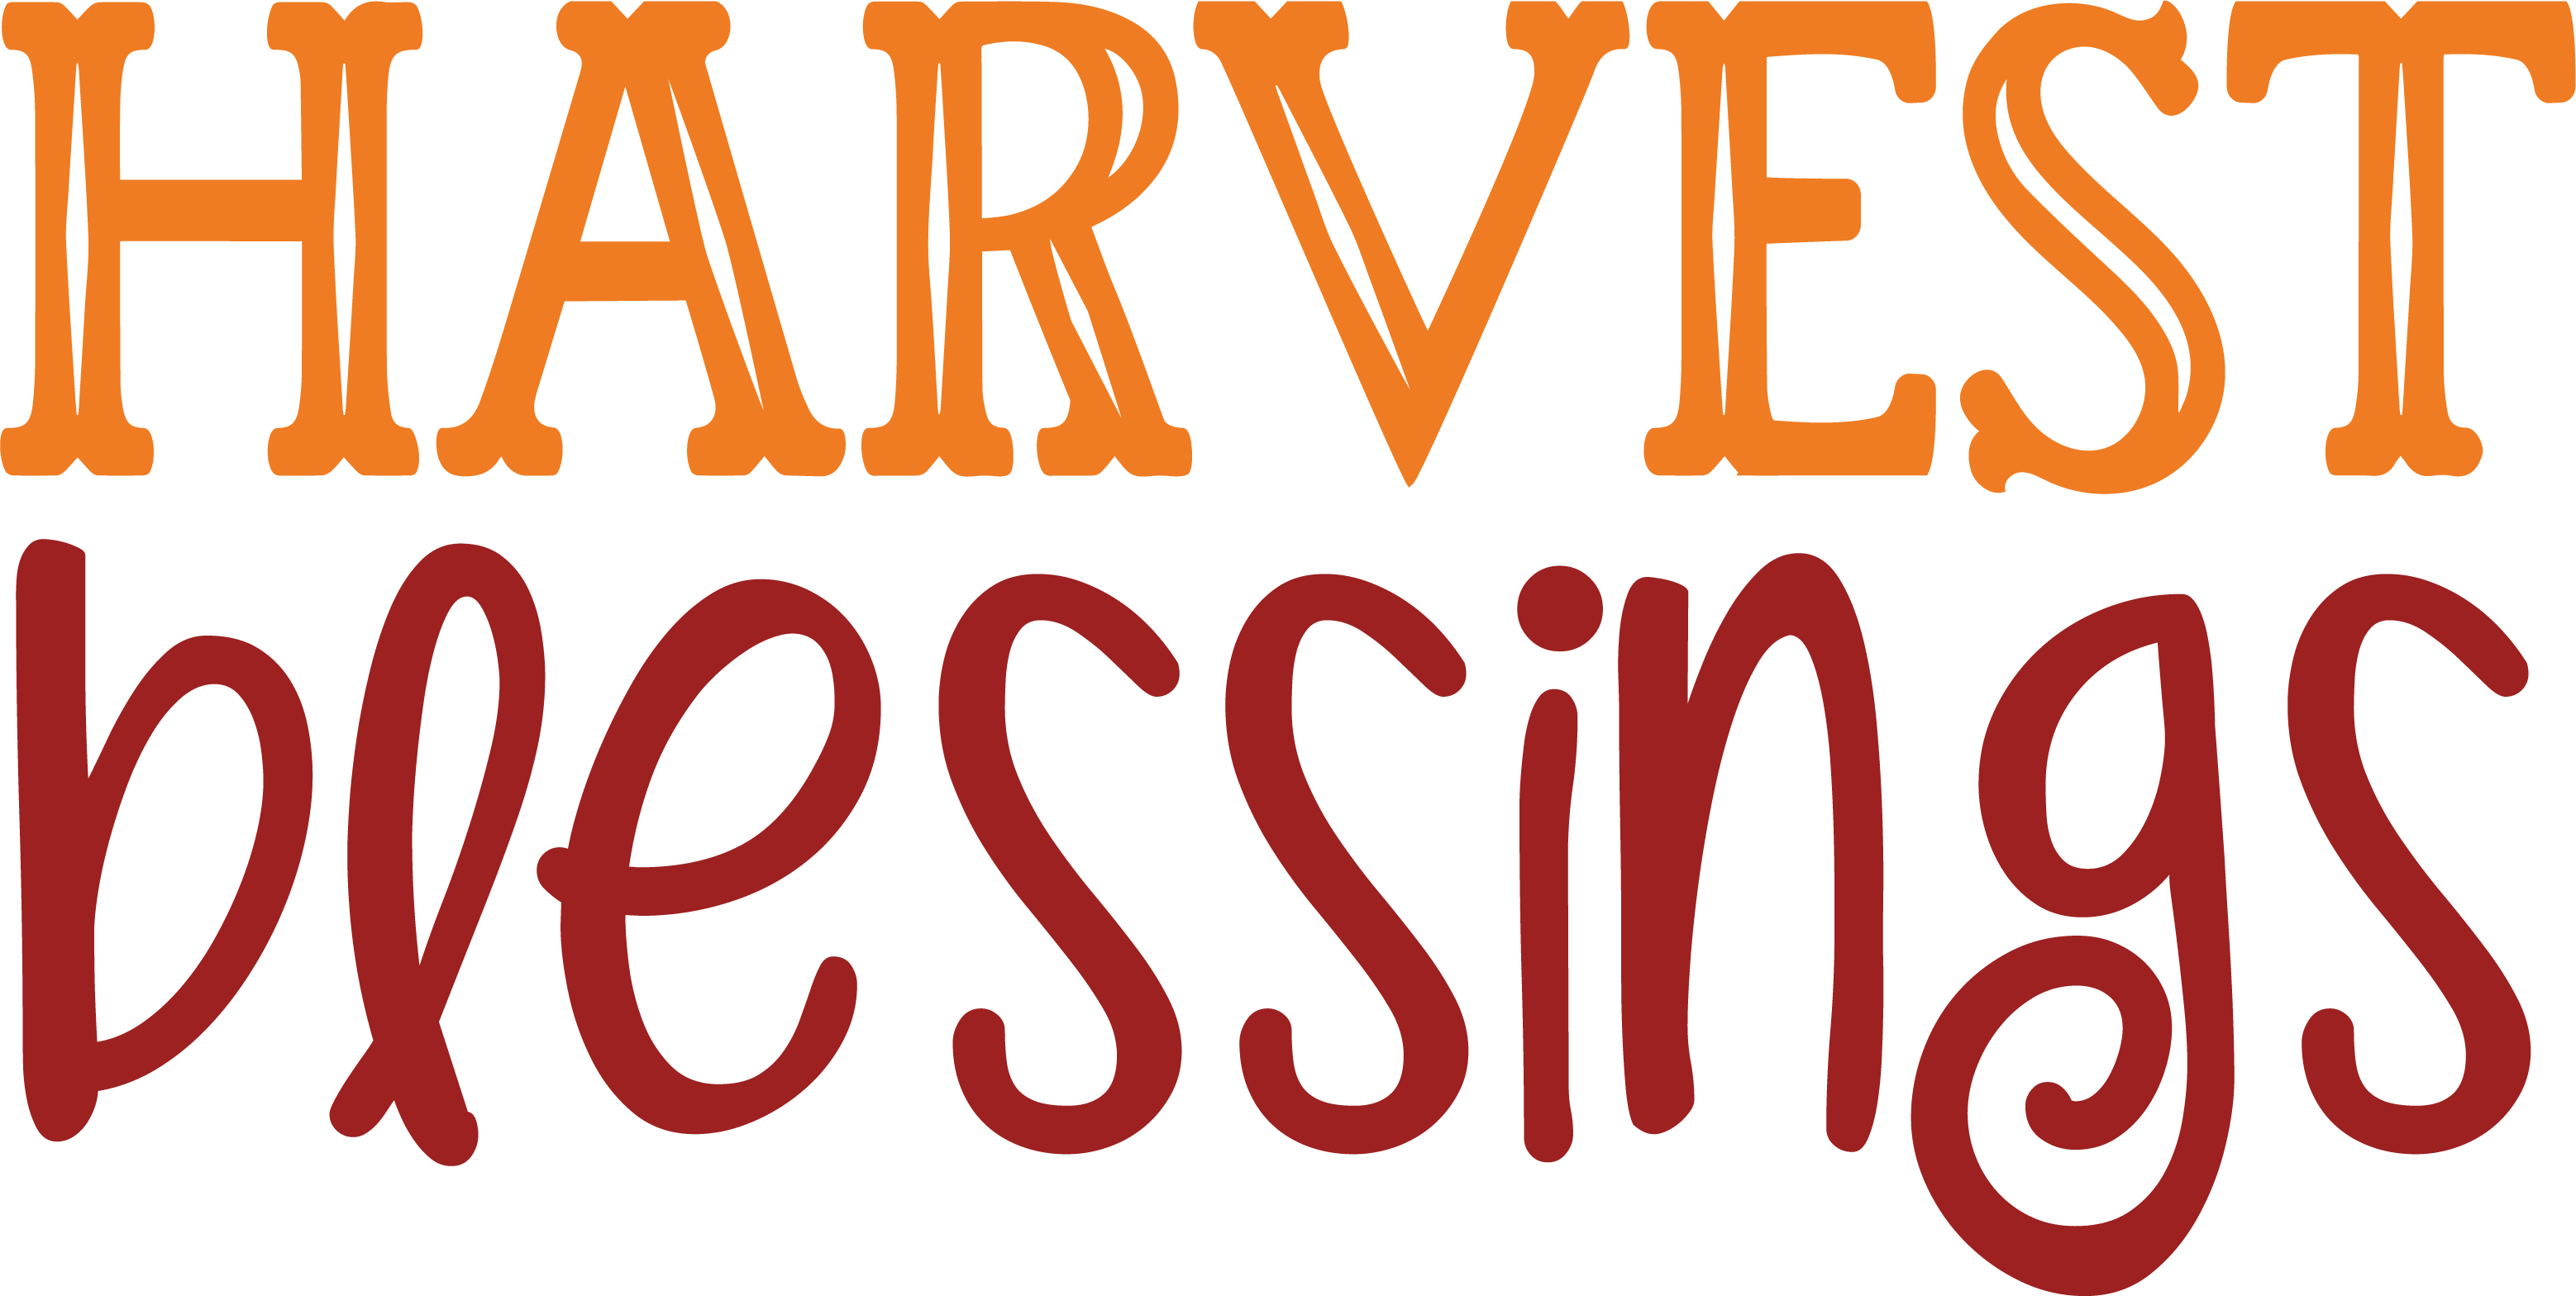 Harvest Blessings SVG Cut File